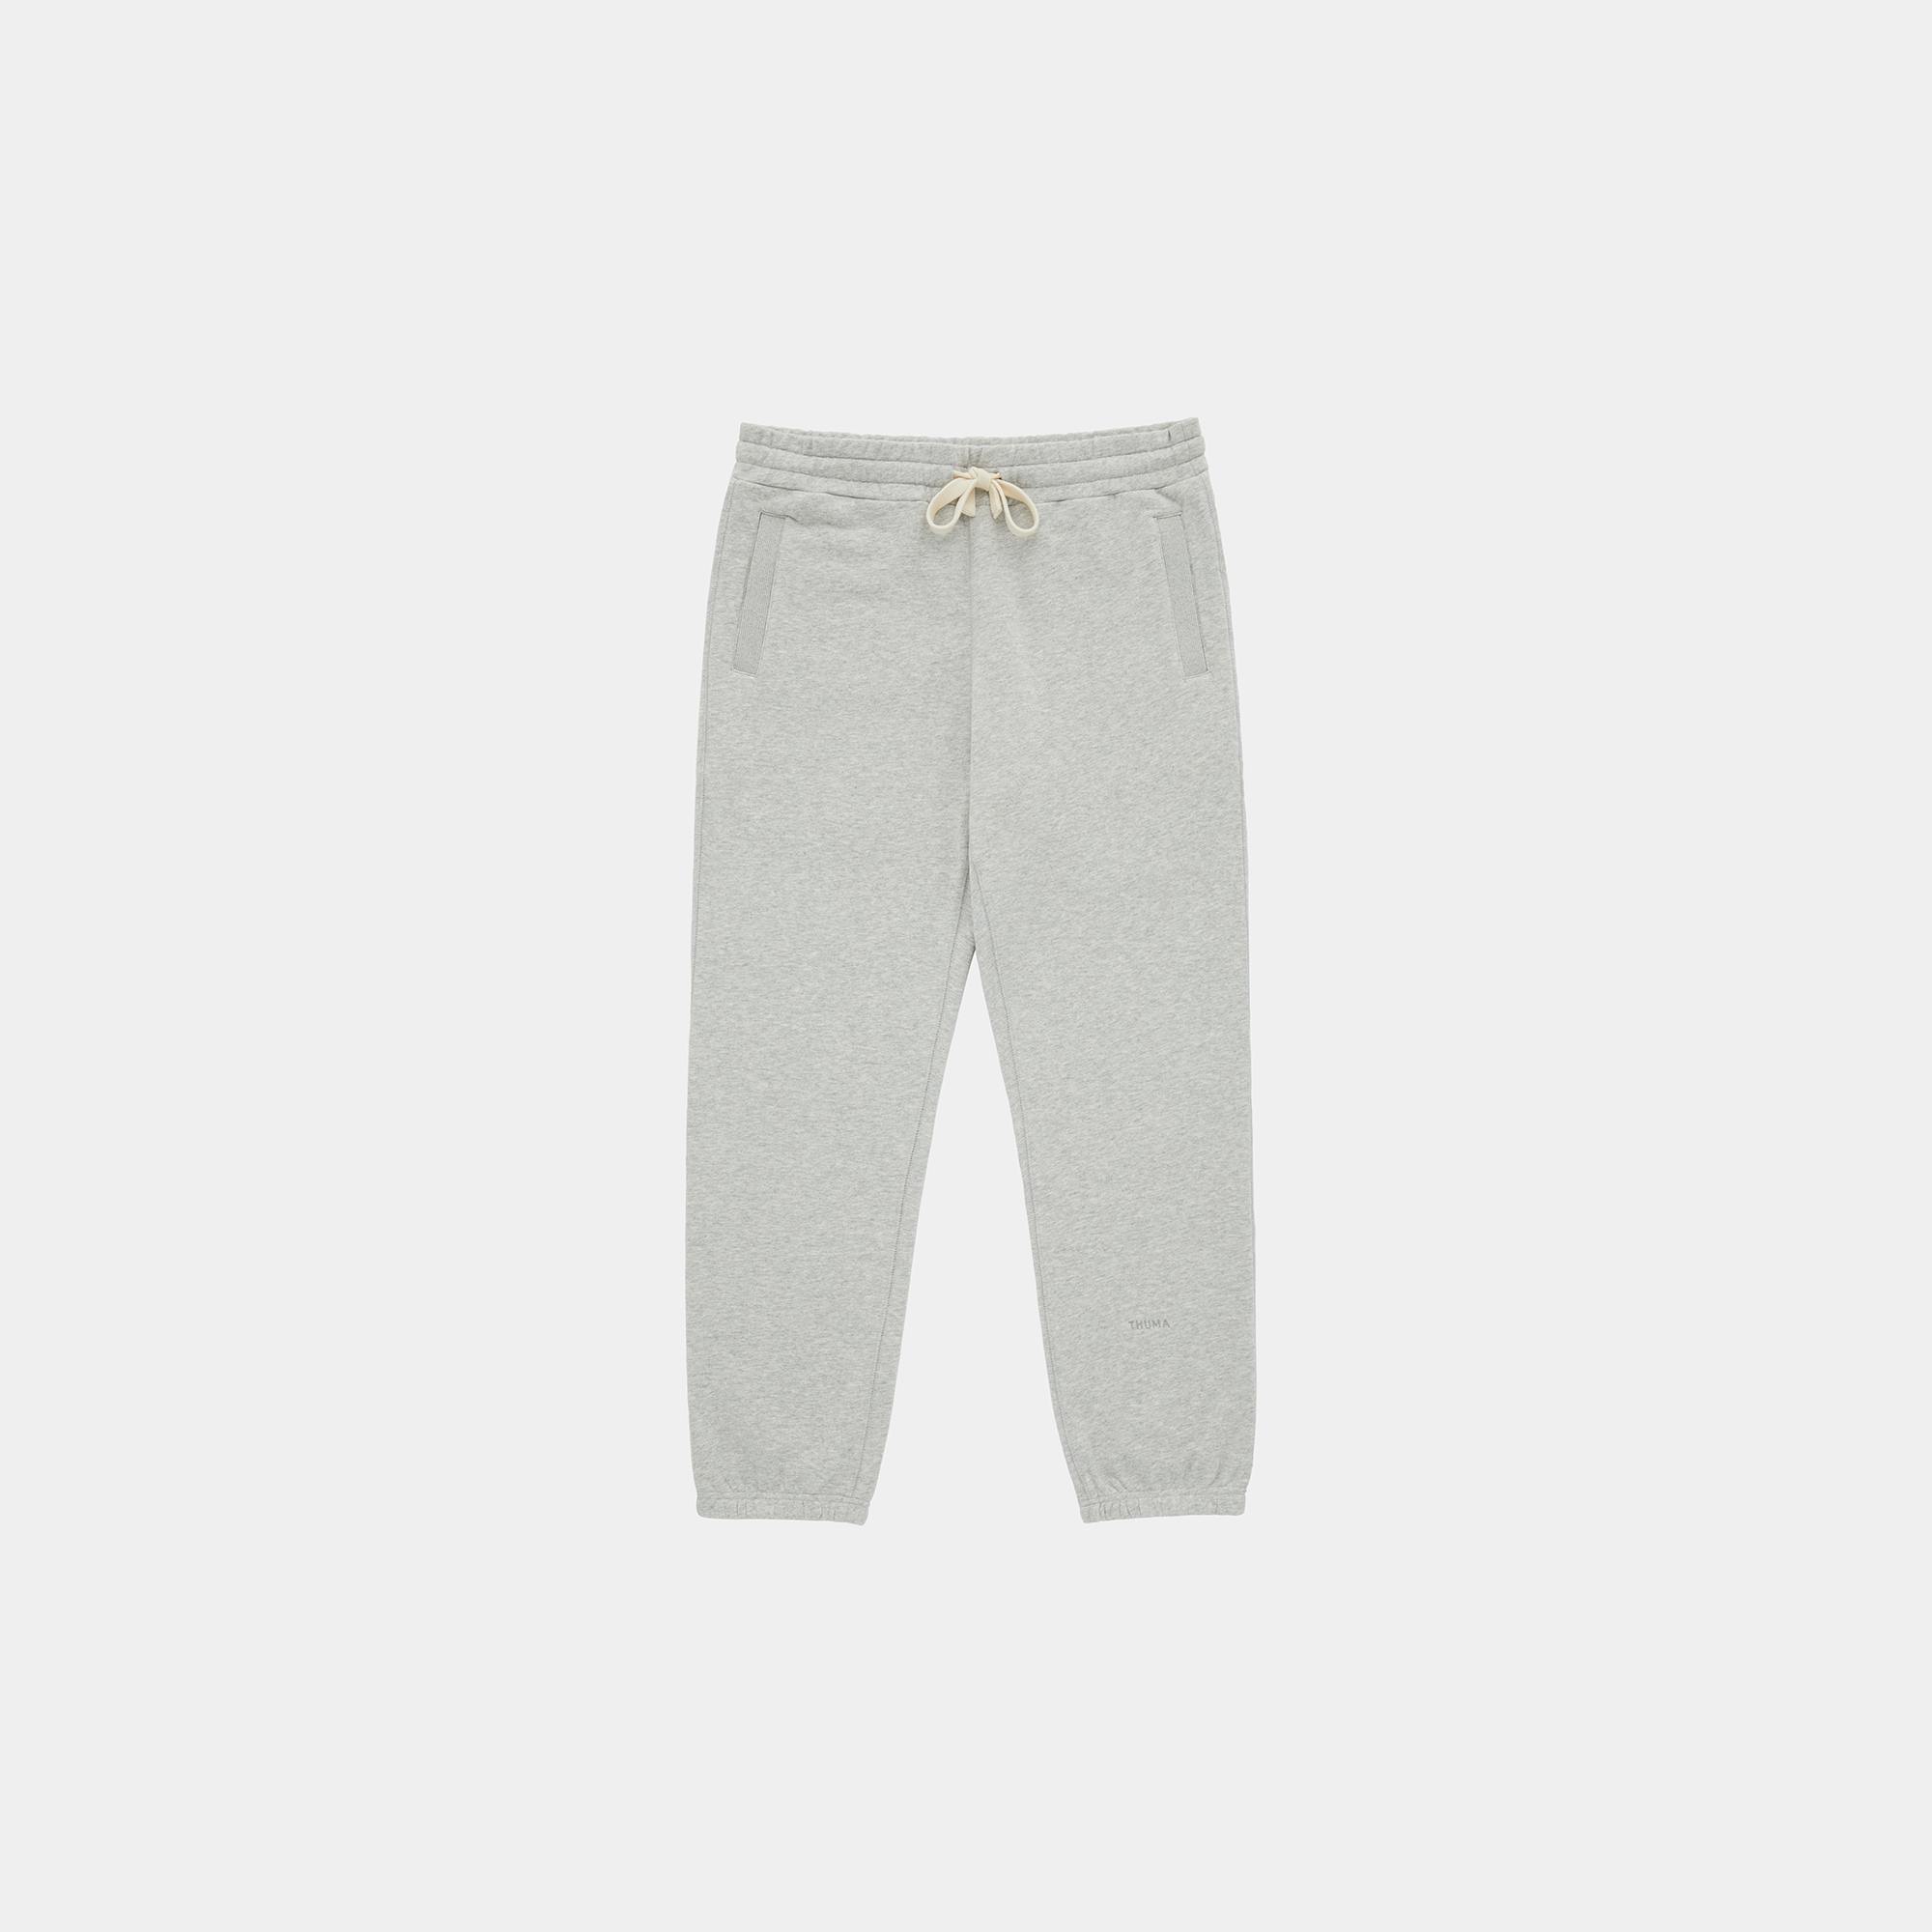 PDP Image: Lounge Sweatpants (W's Fit - Grey) - 3:2 - Front 